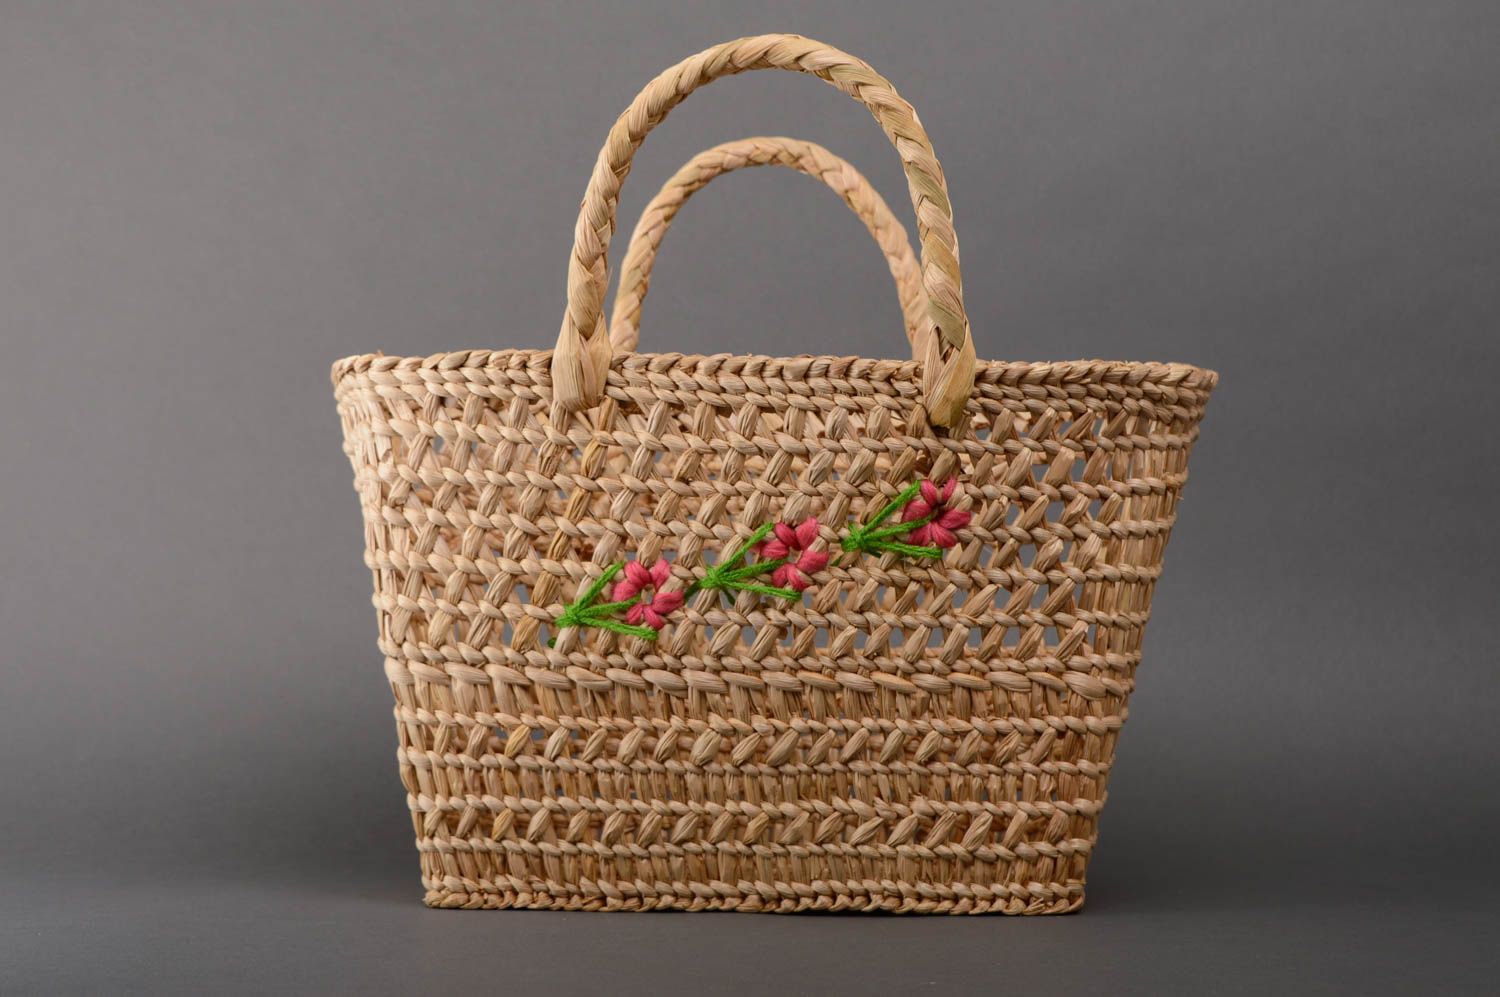 Reedmace basket purse with thread flowers photo 1